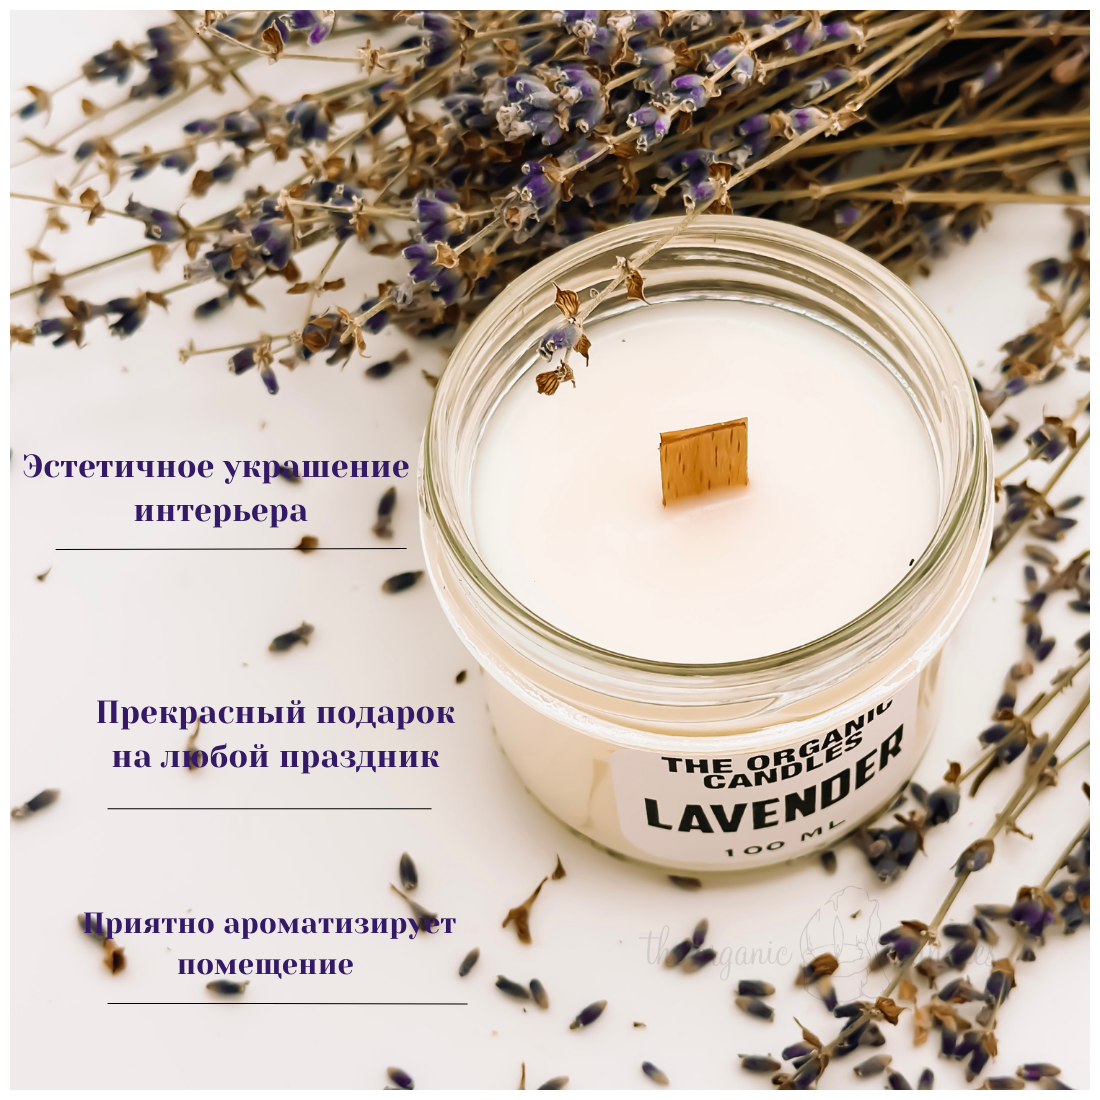 Свеча соевая с деревянным фитилем "Лаванда - Lavender" The Organic Candles 100 ml